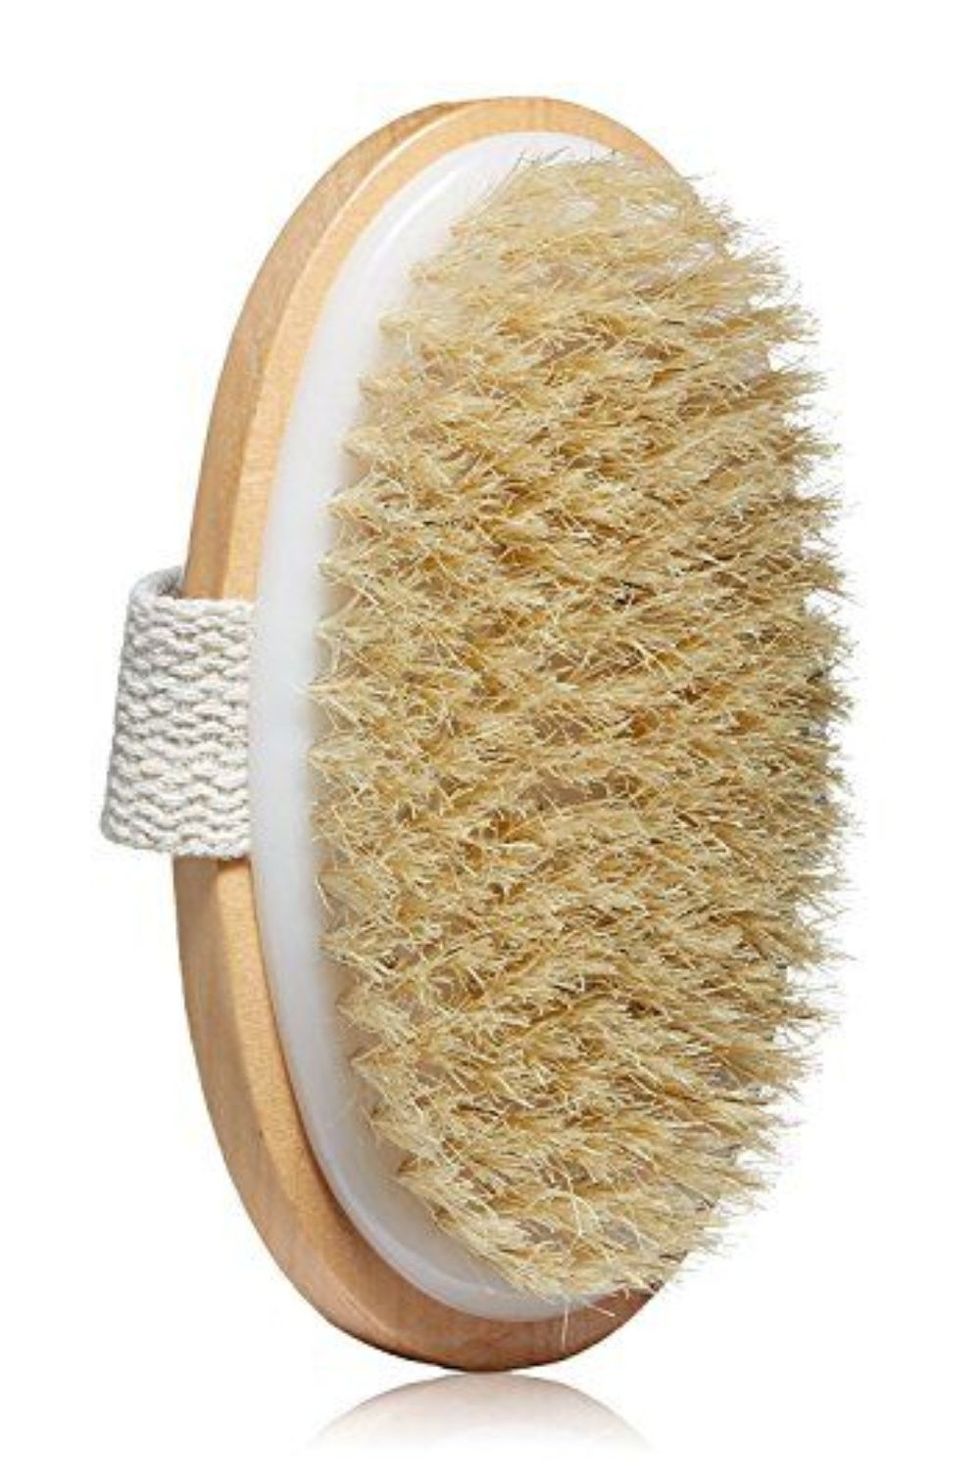 Natural Bristle Body Brush